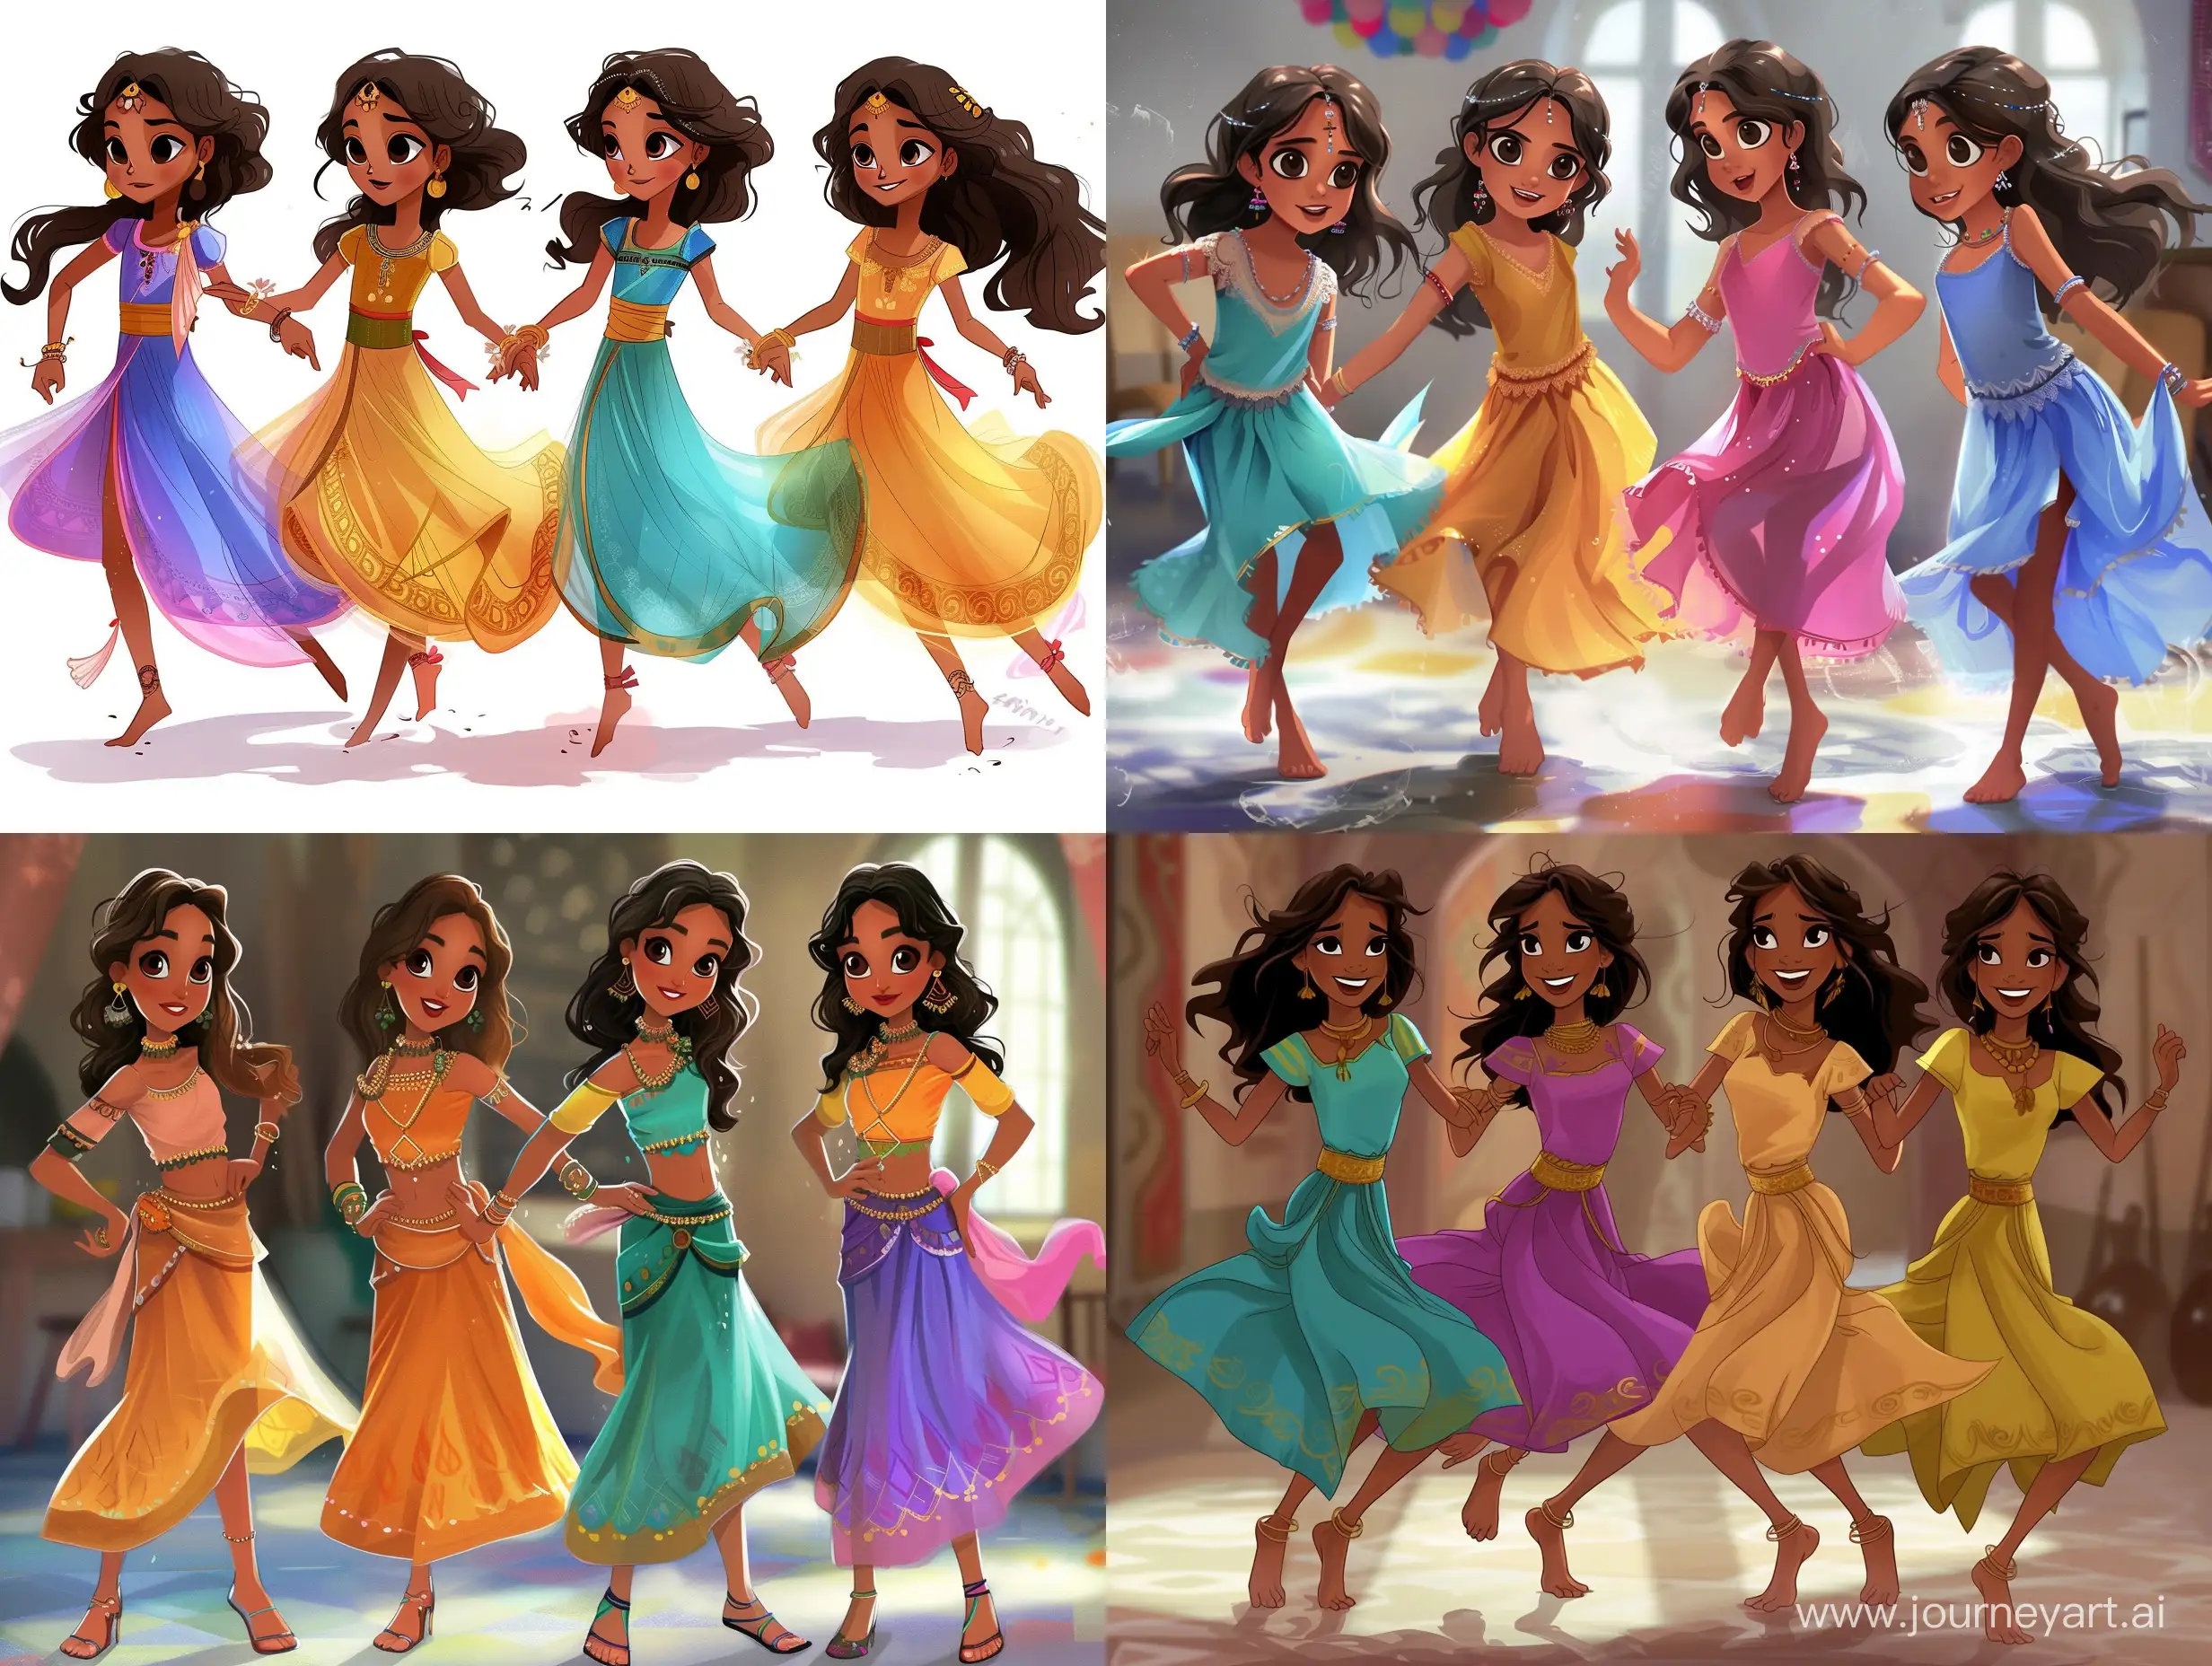 Enchanting-AfroIndian-Sisters-in-DisneyPixar-Style